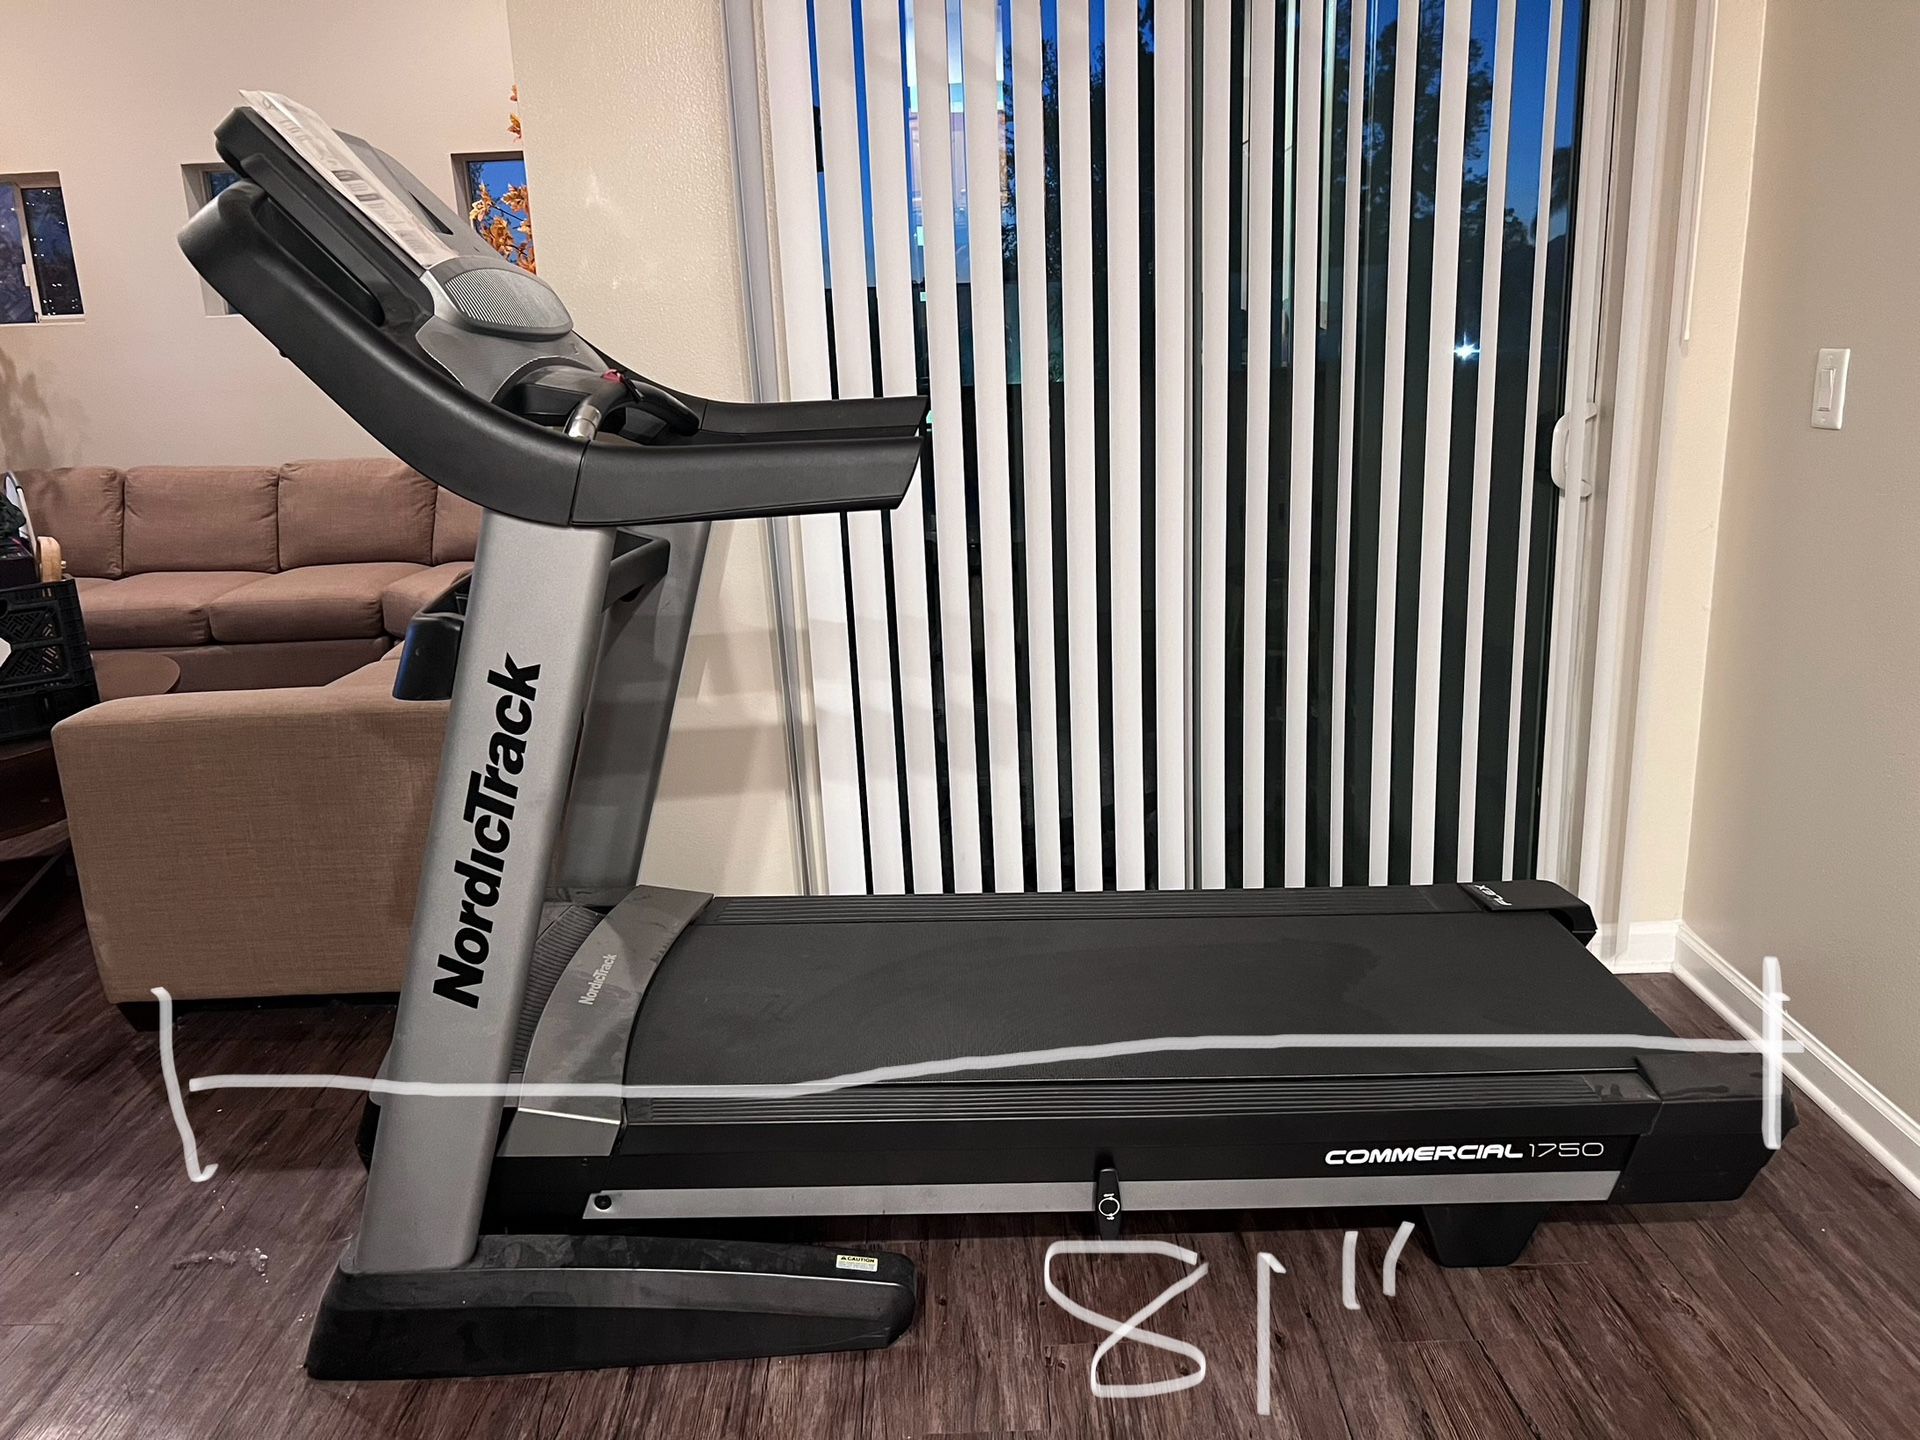 Nordic Track Commercial 1750 Treadmill 